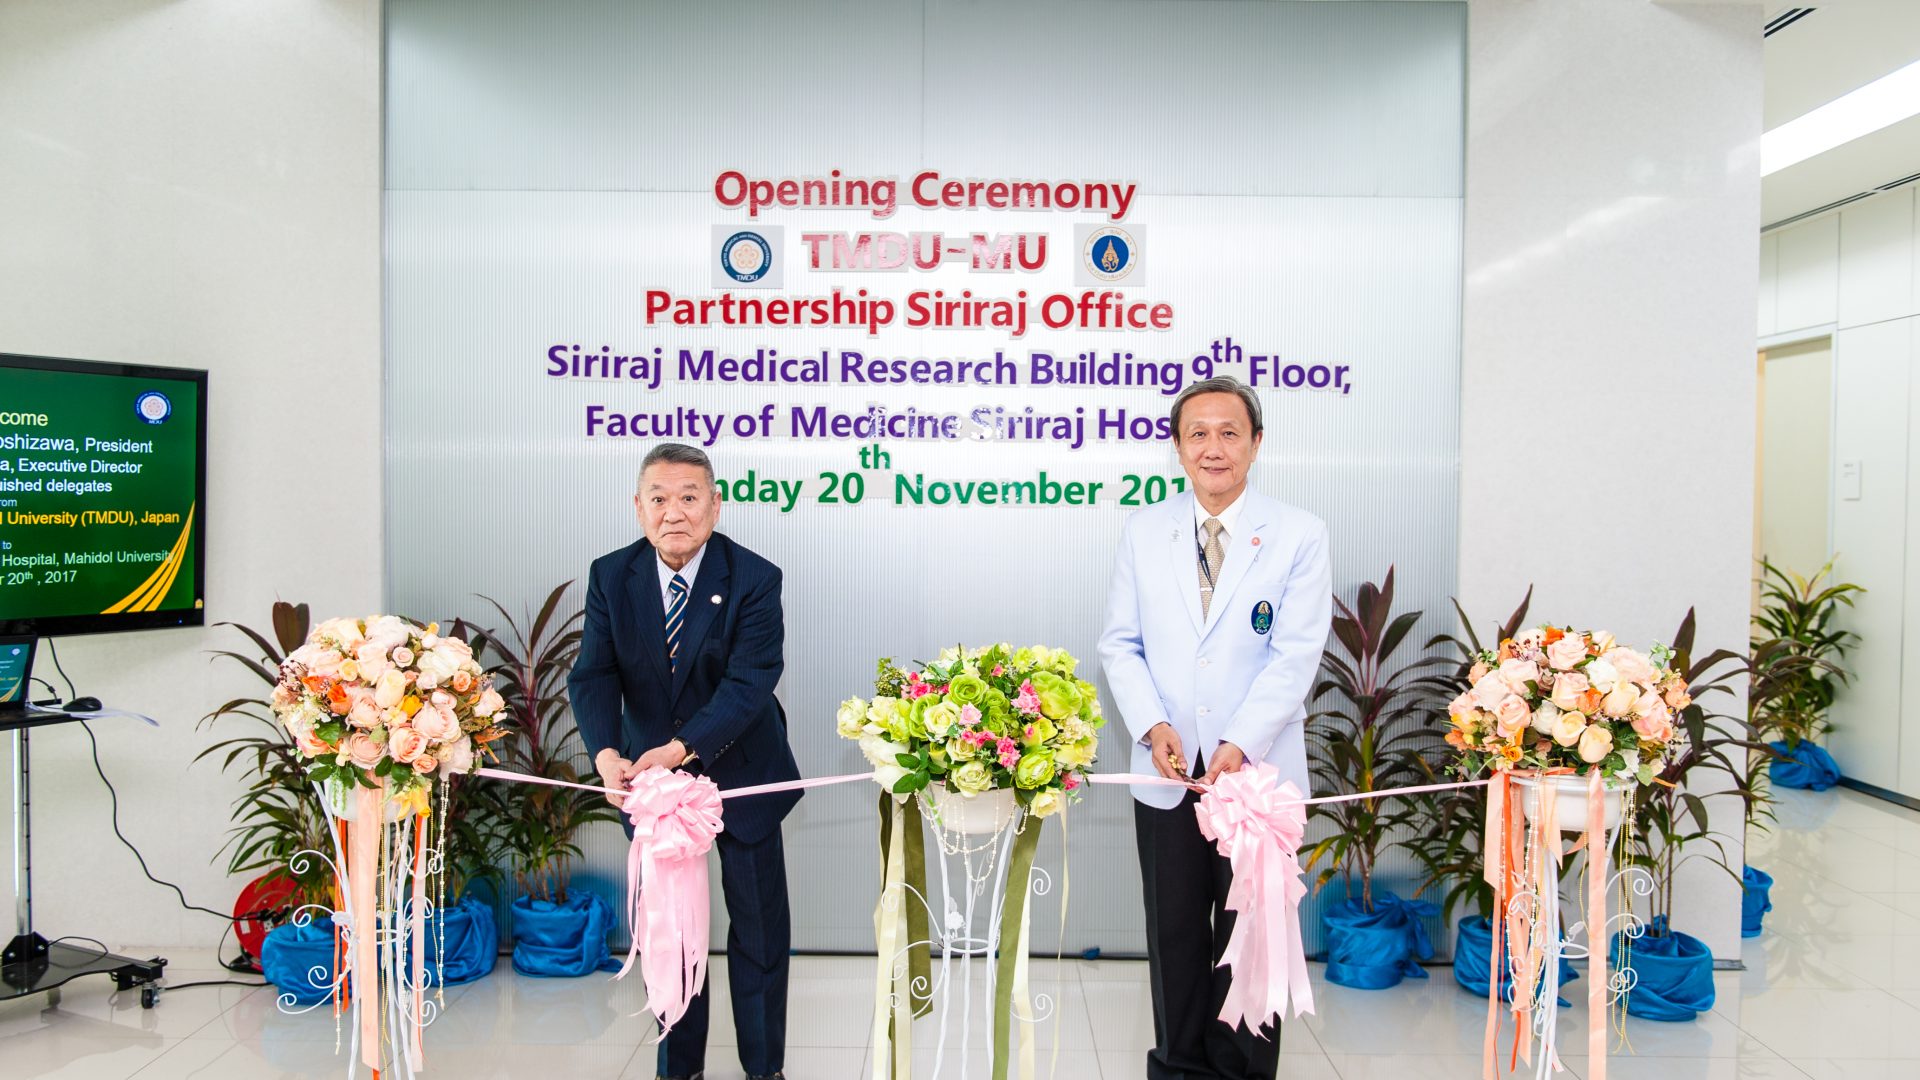 TMDU – MU Partnership Siriraj Office: The Grand Opening